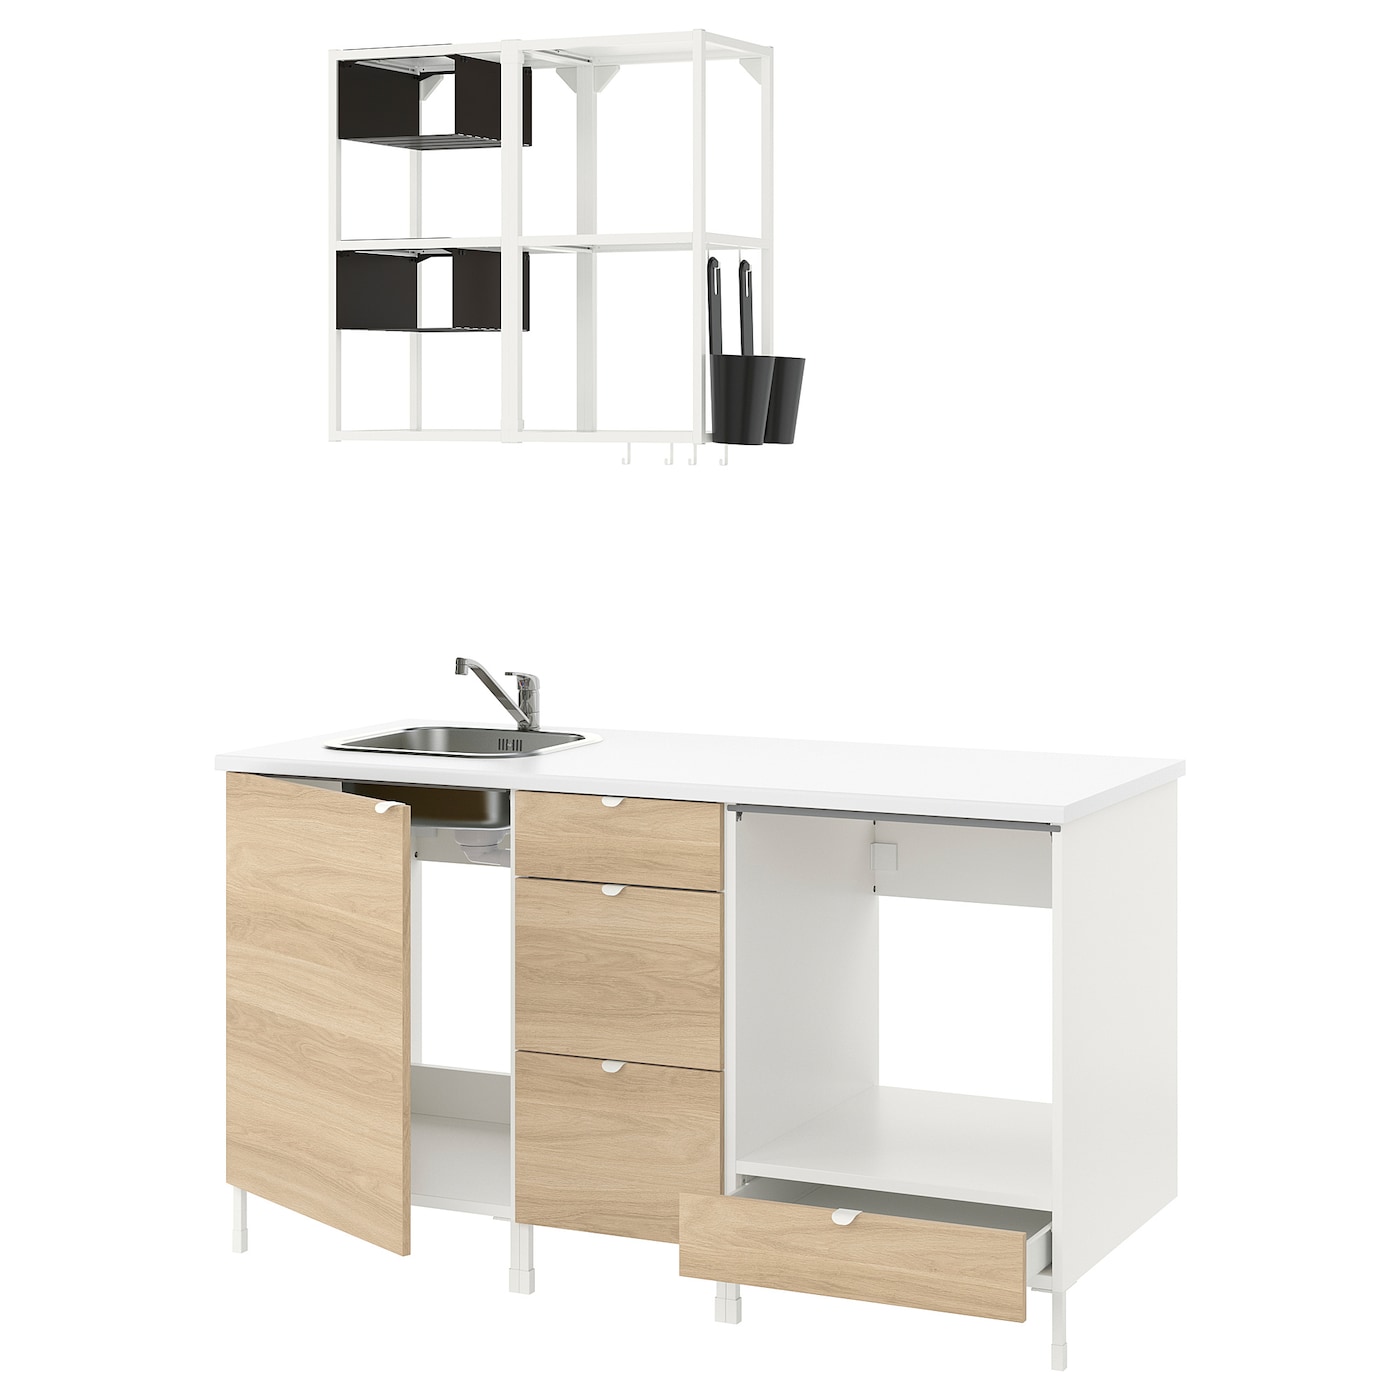 Кухня -  ENHET  IKEA/ ЭНХЕТ ИКЕА, 222х163 см, белый/бежевый